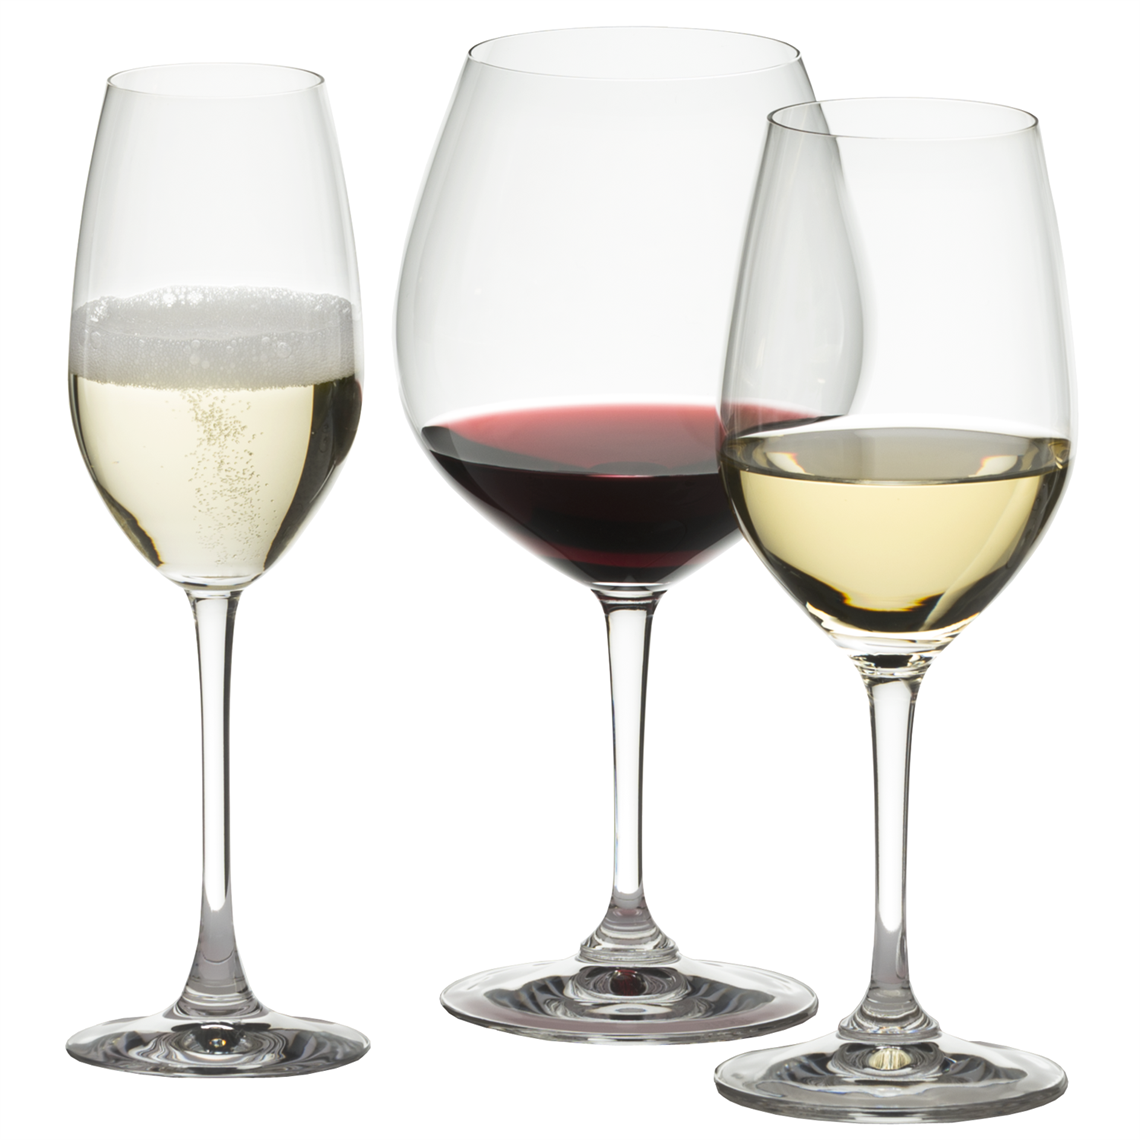 View more white wine glasses from our Restaurant & Trade Glasses range